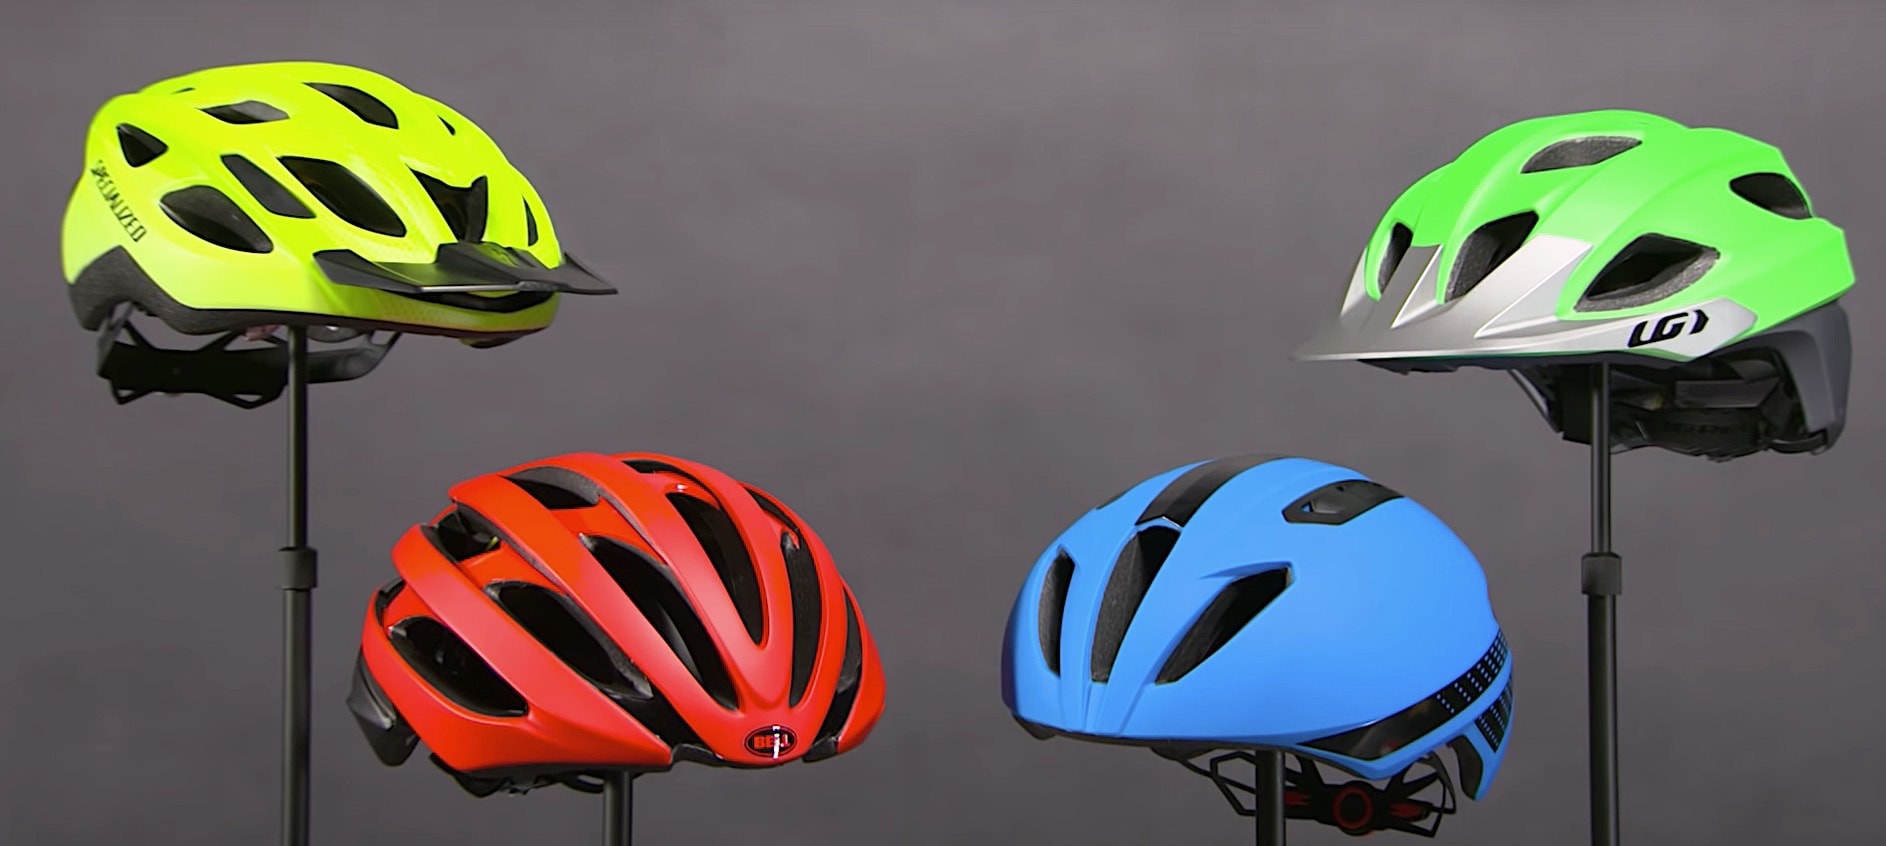 IIHS Begins Bicycle Helmets Crash Test Rating Program - autoevolution